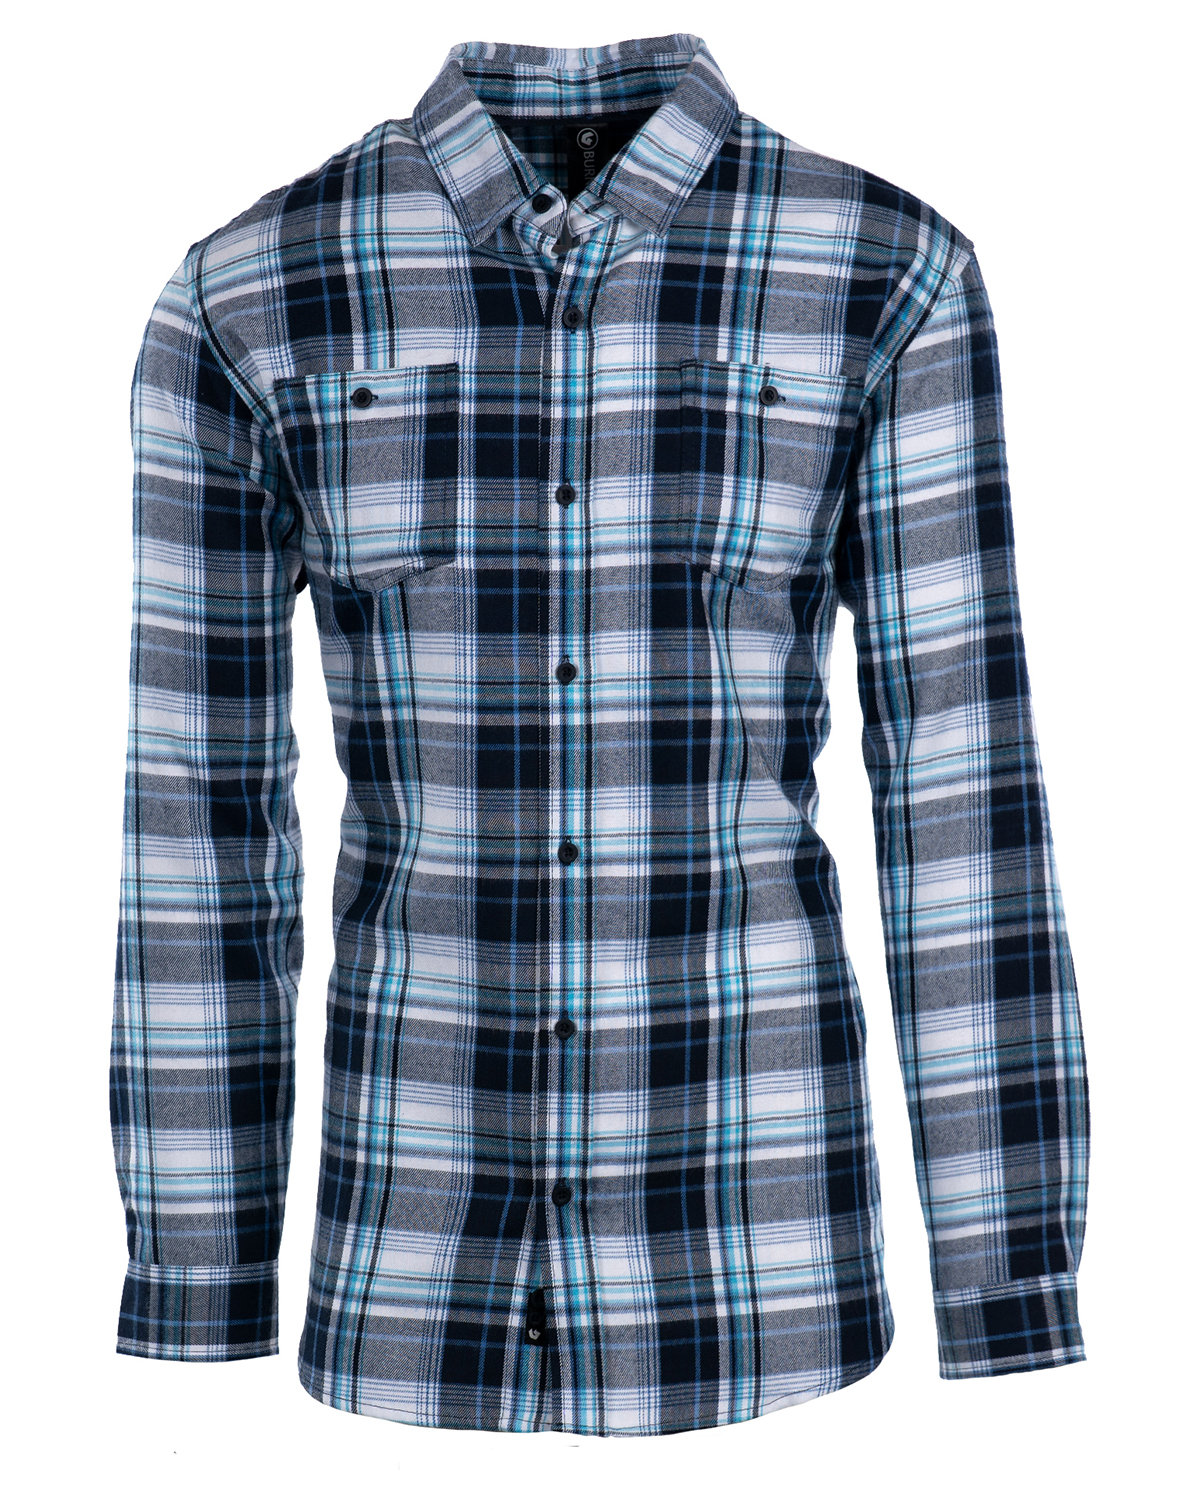 Burnside 8220 - Men's Perfect Flannel Work Shirt